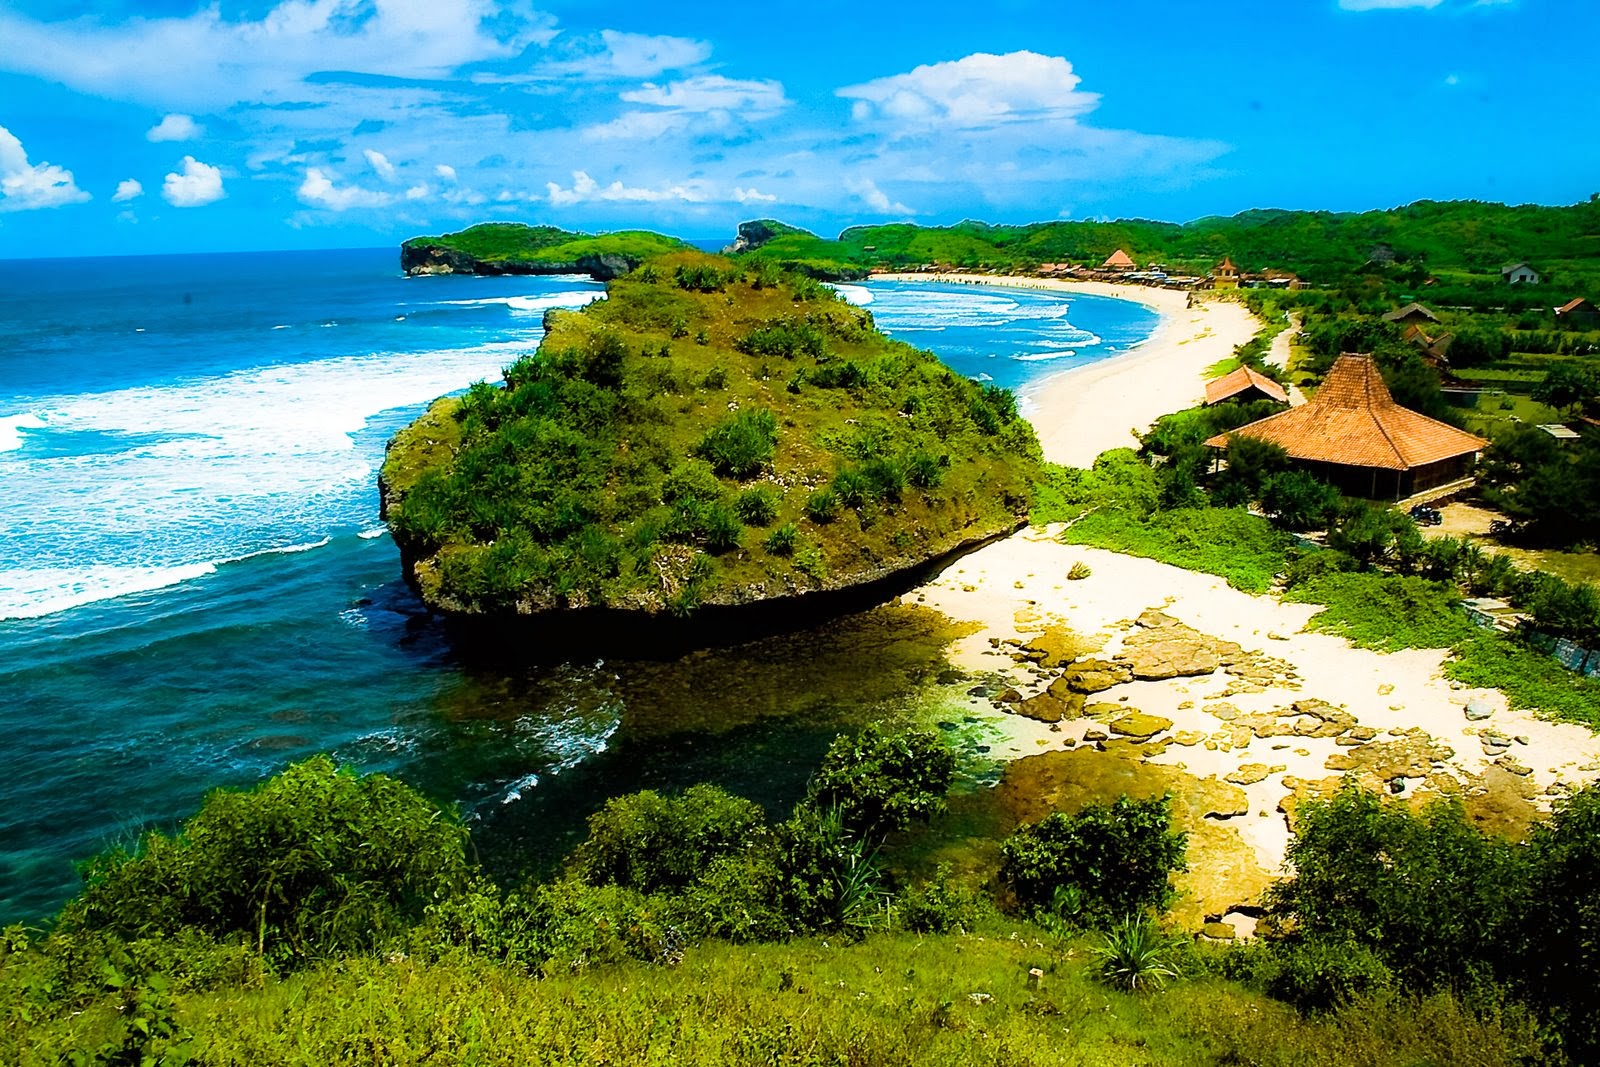  Indonesia  jogjakarta beauty beach  sadranan beach  